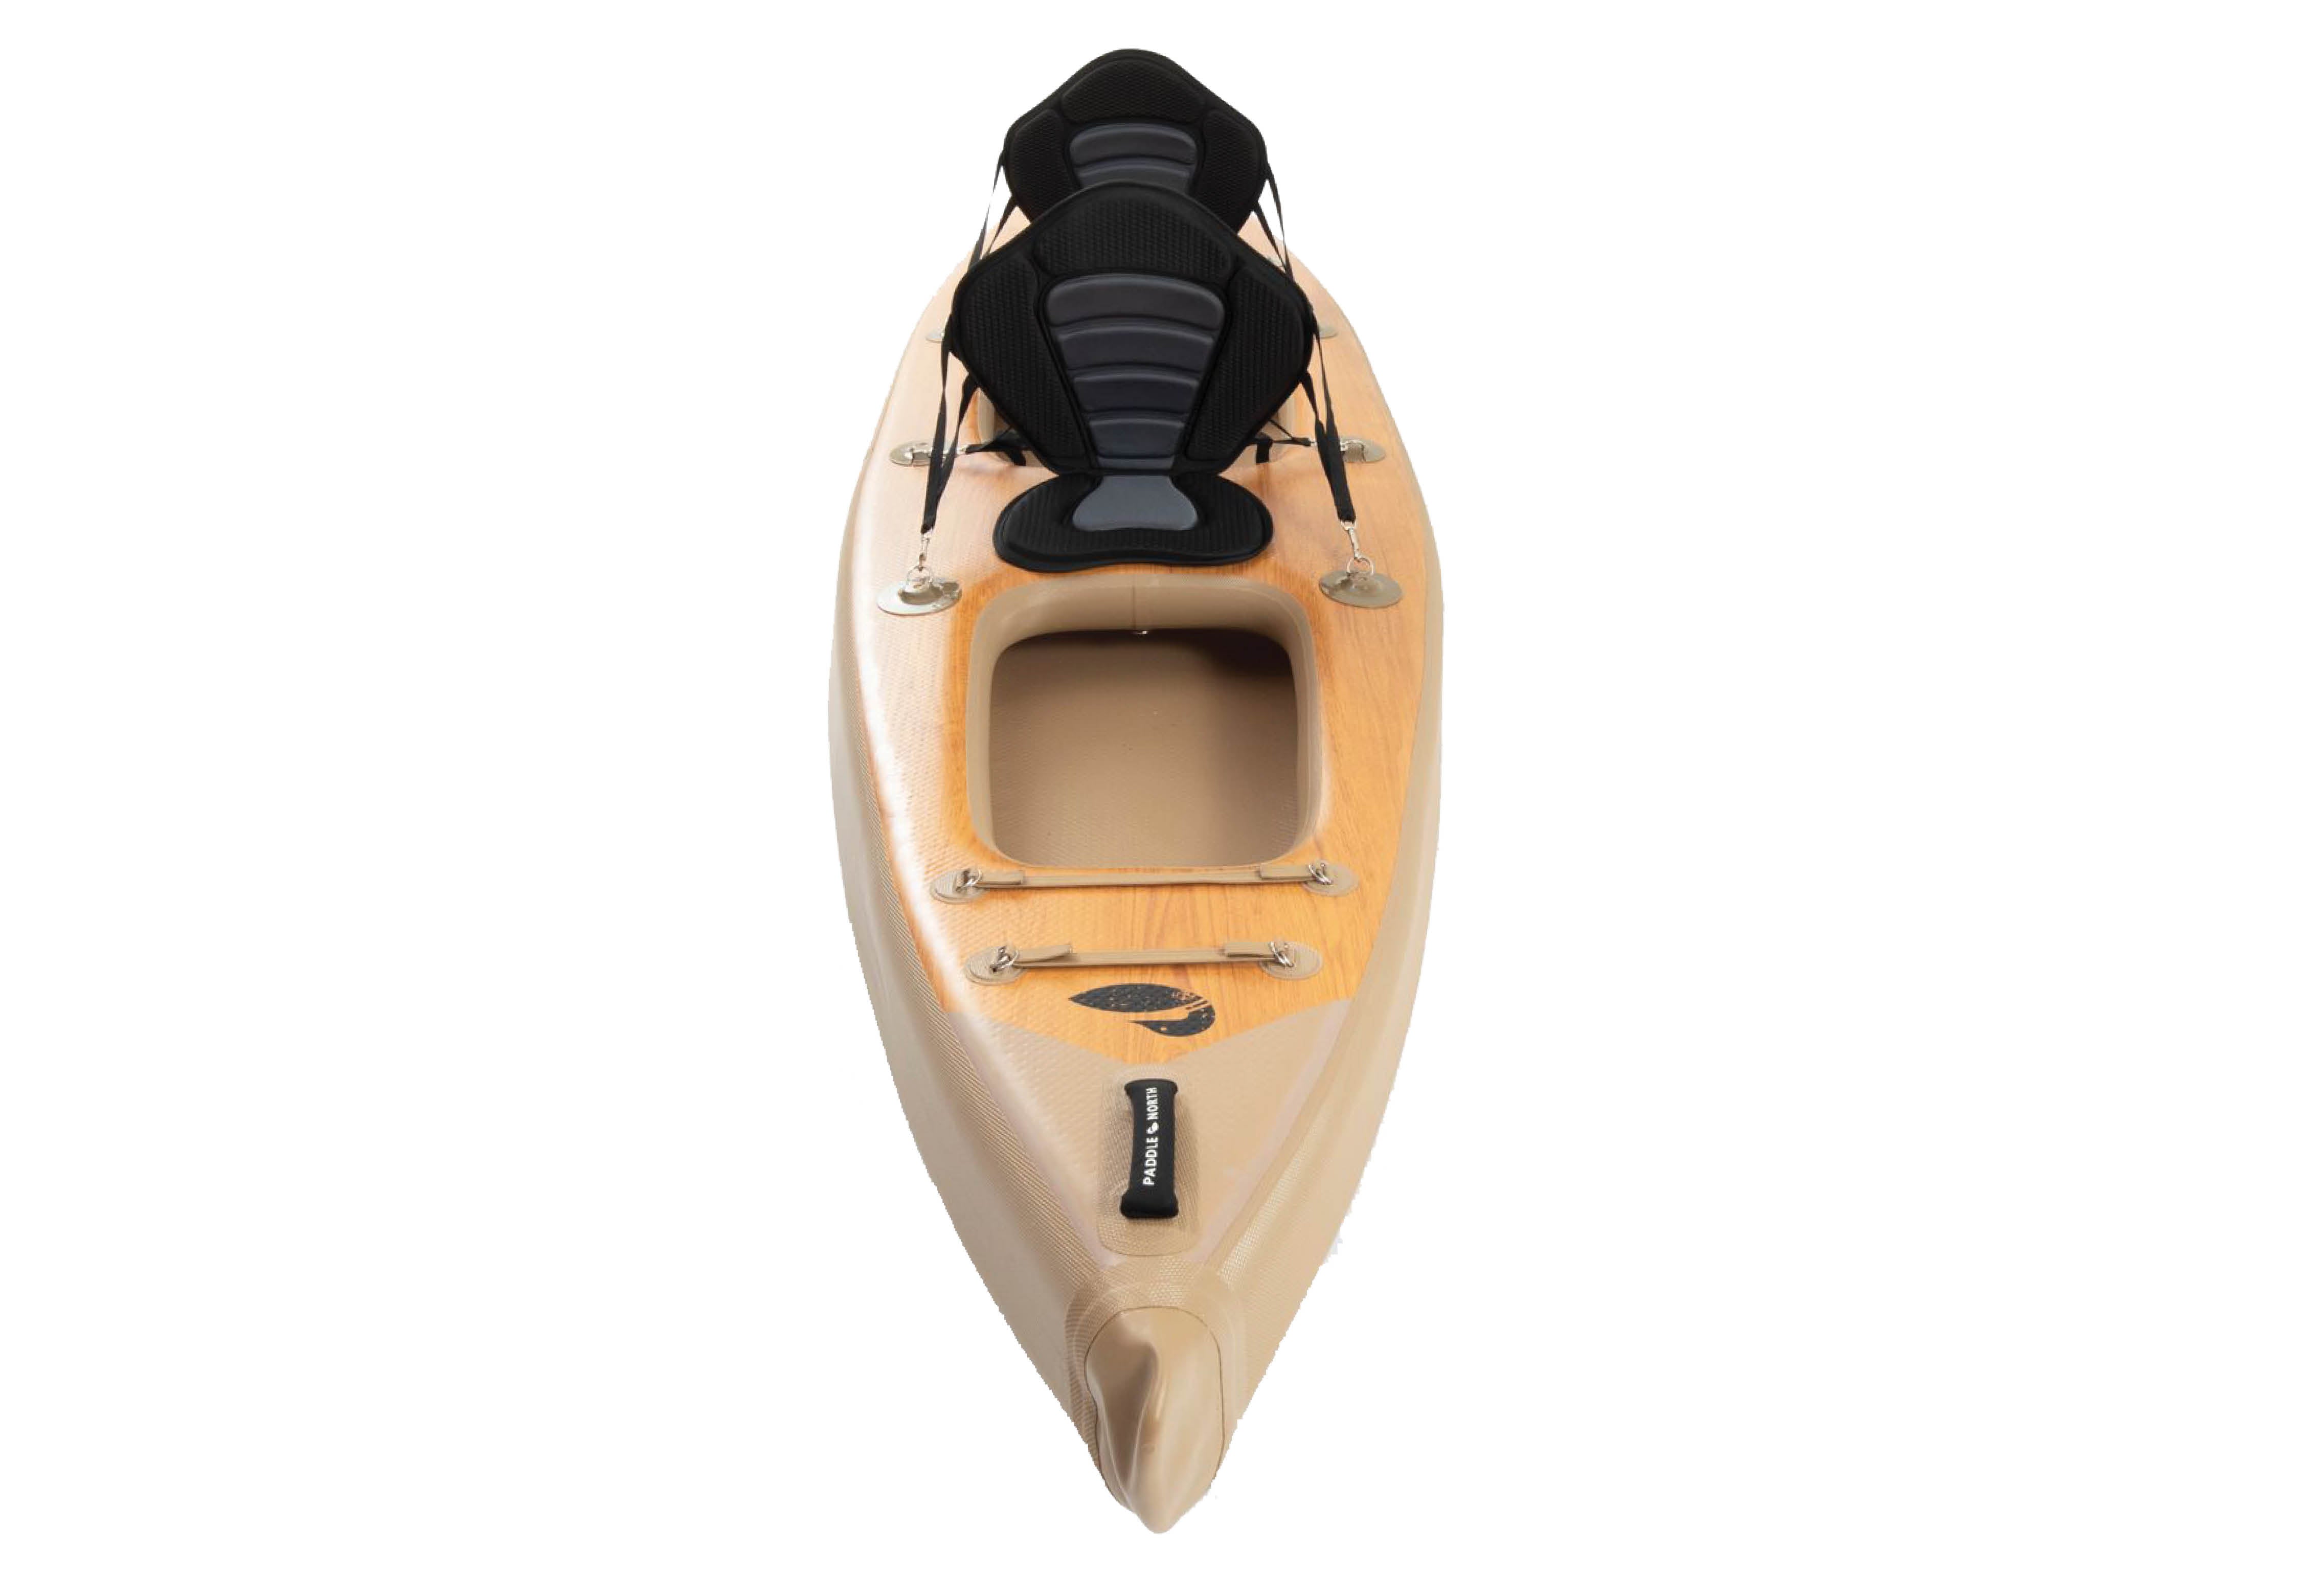 Karve XL inflatable tandem kayak against white background